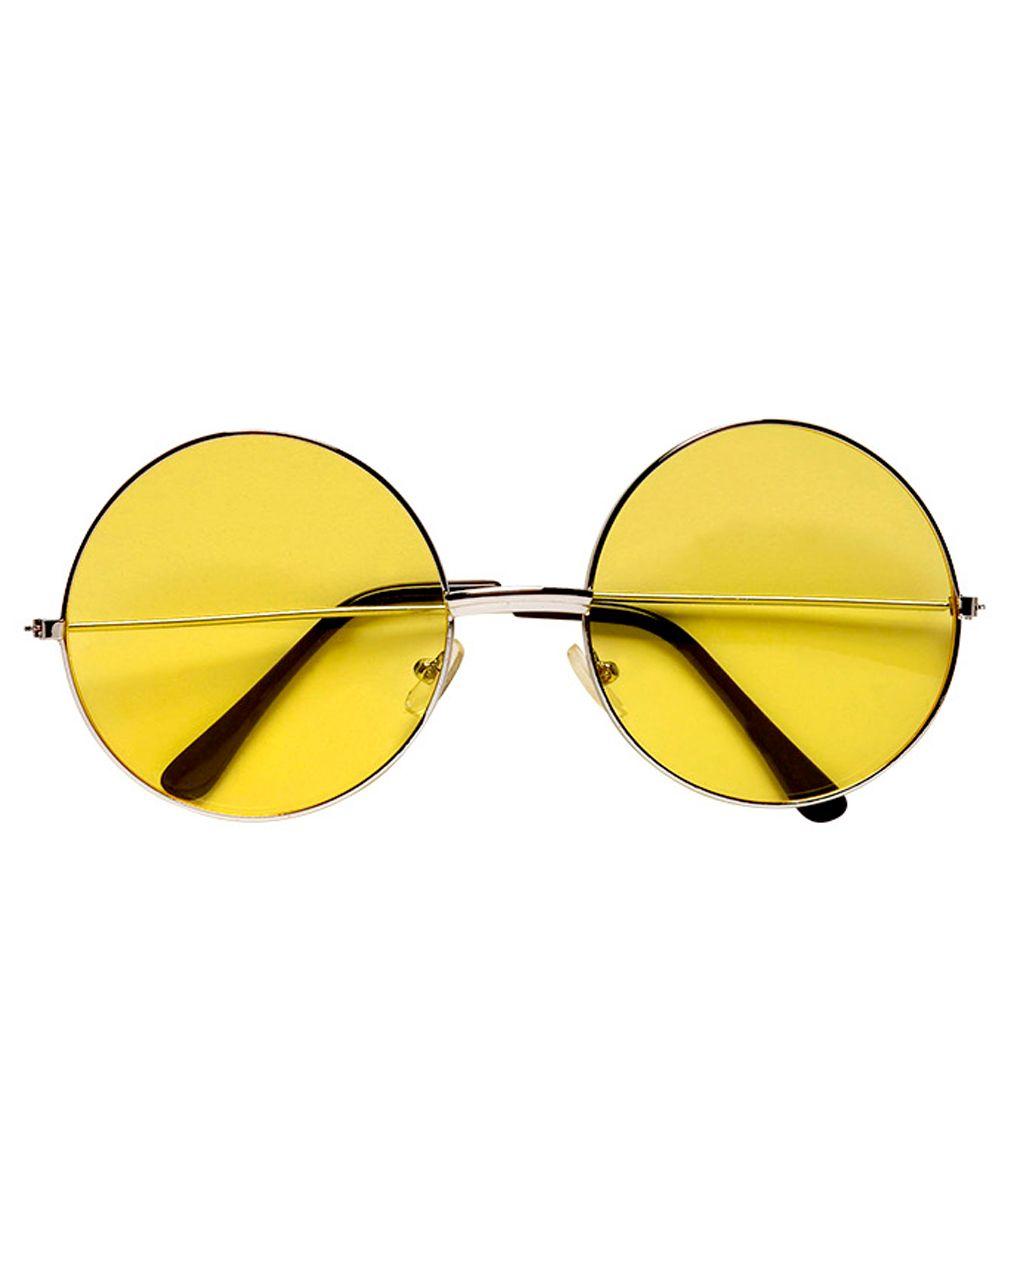 Hippie Glasses Logo - Yellow 70s Sunglasses Hippie Glasses Nickel Glasses Costume Glasses ...